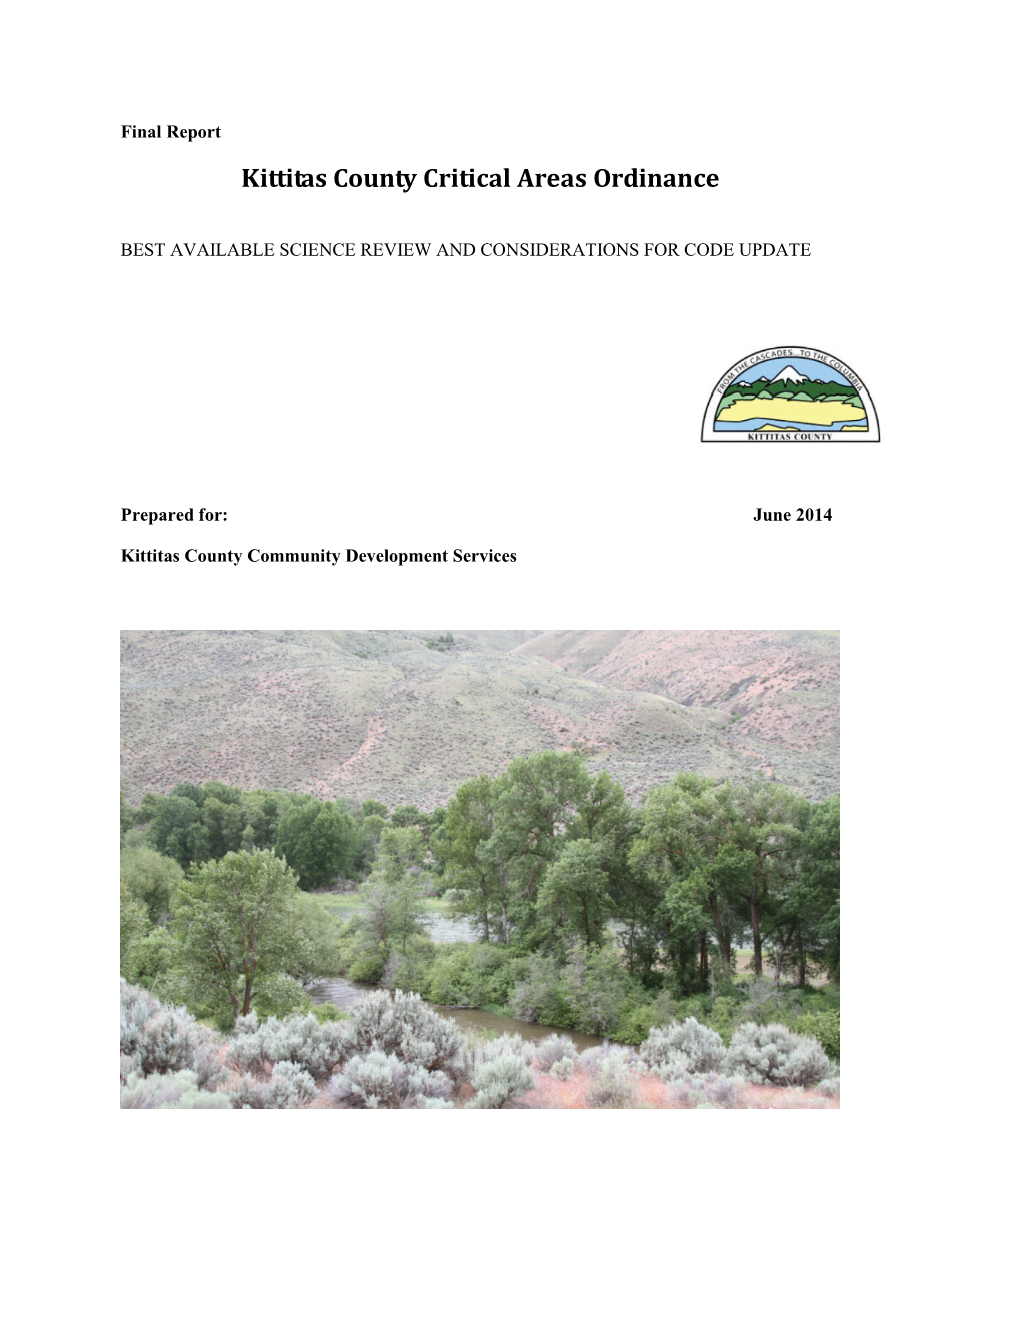 Kittitas County Critical Areas Ordinance